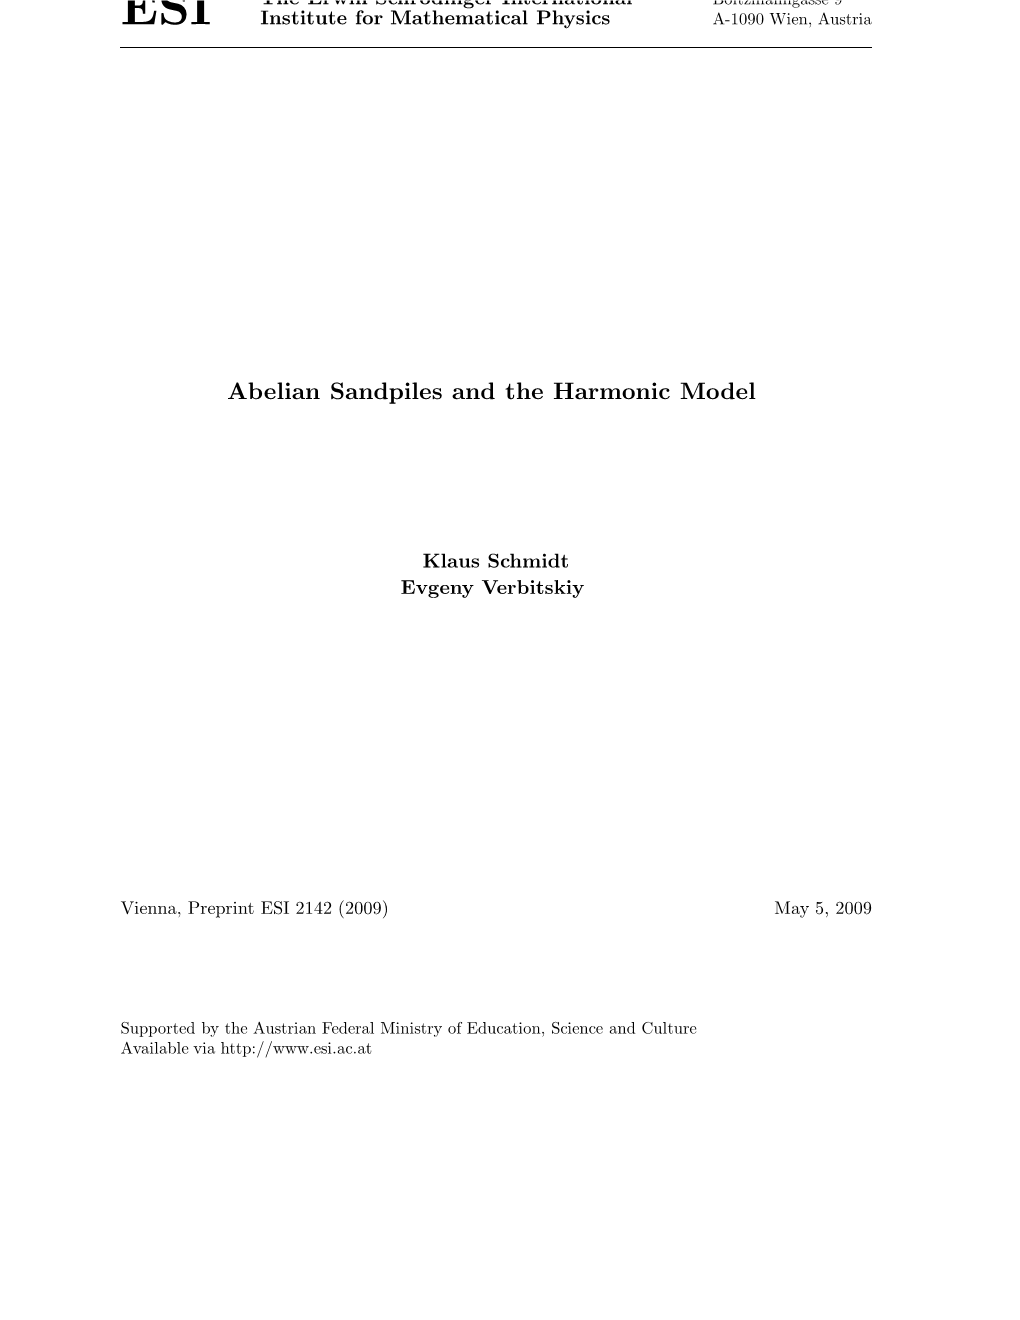 Abelian Sandpiles and the Harmonic Model